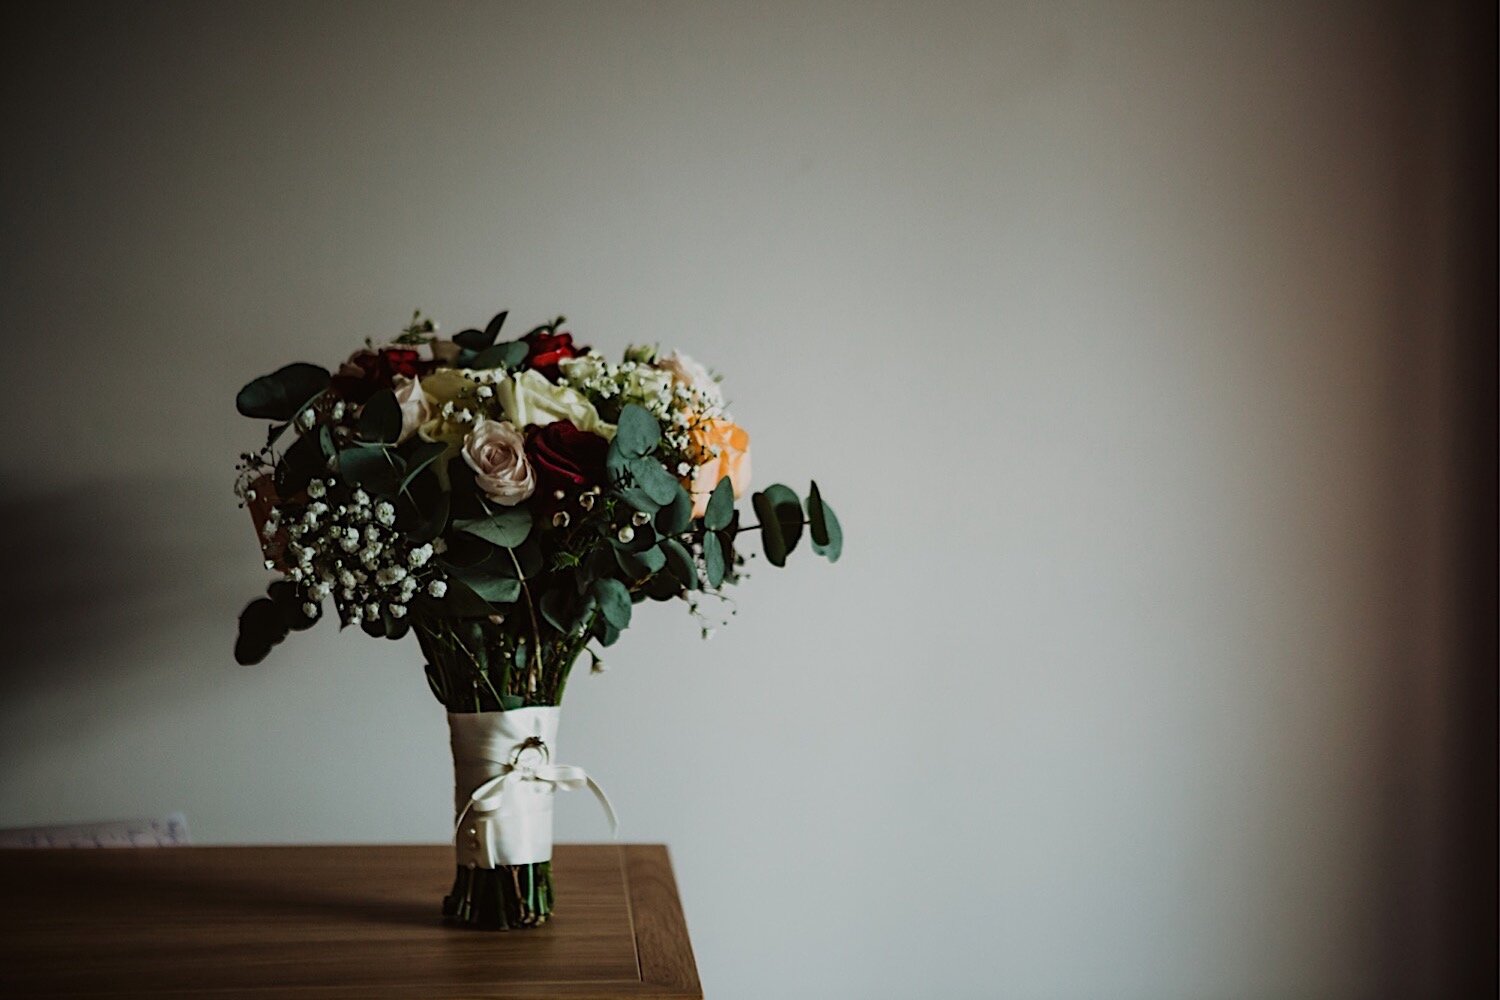 007_TWS-52_bride_floristry_bridal_photography_henley_oxfordshire_millitary_flowers_bouquet_crooked_wedding_groom_winter_billet.jpg